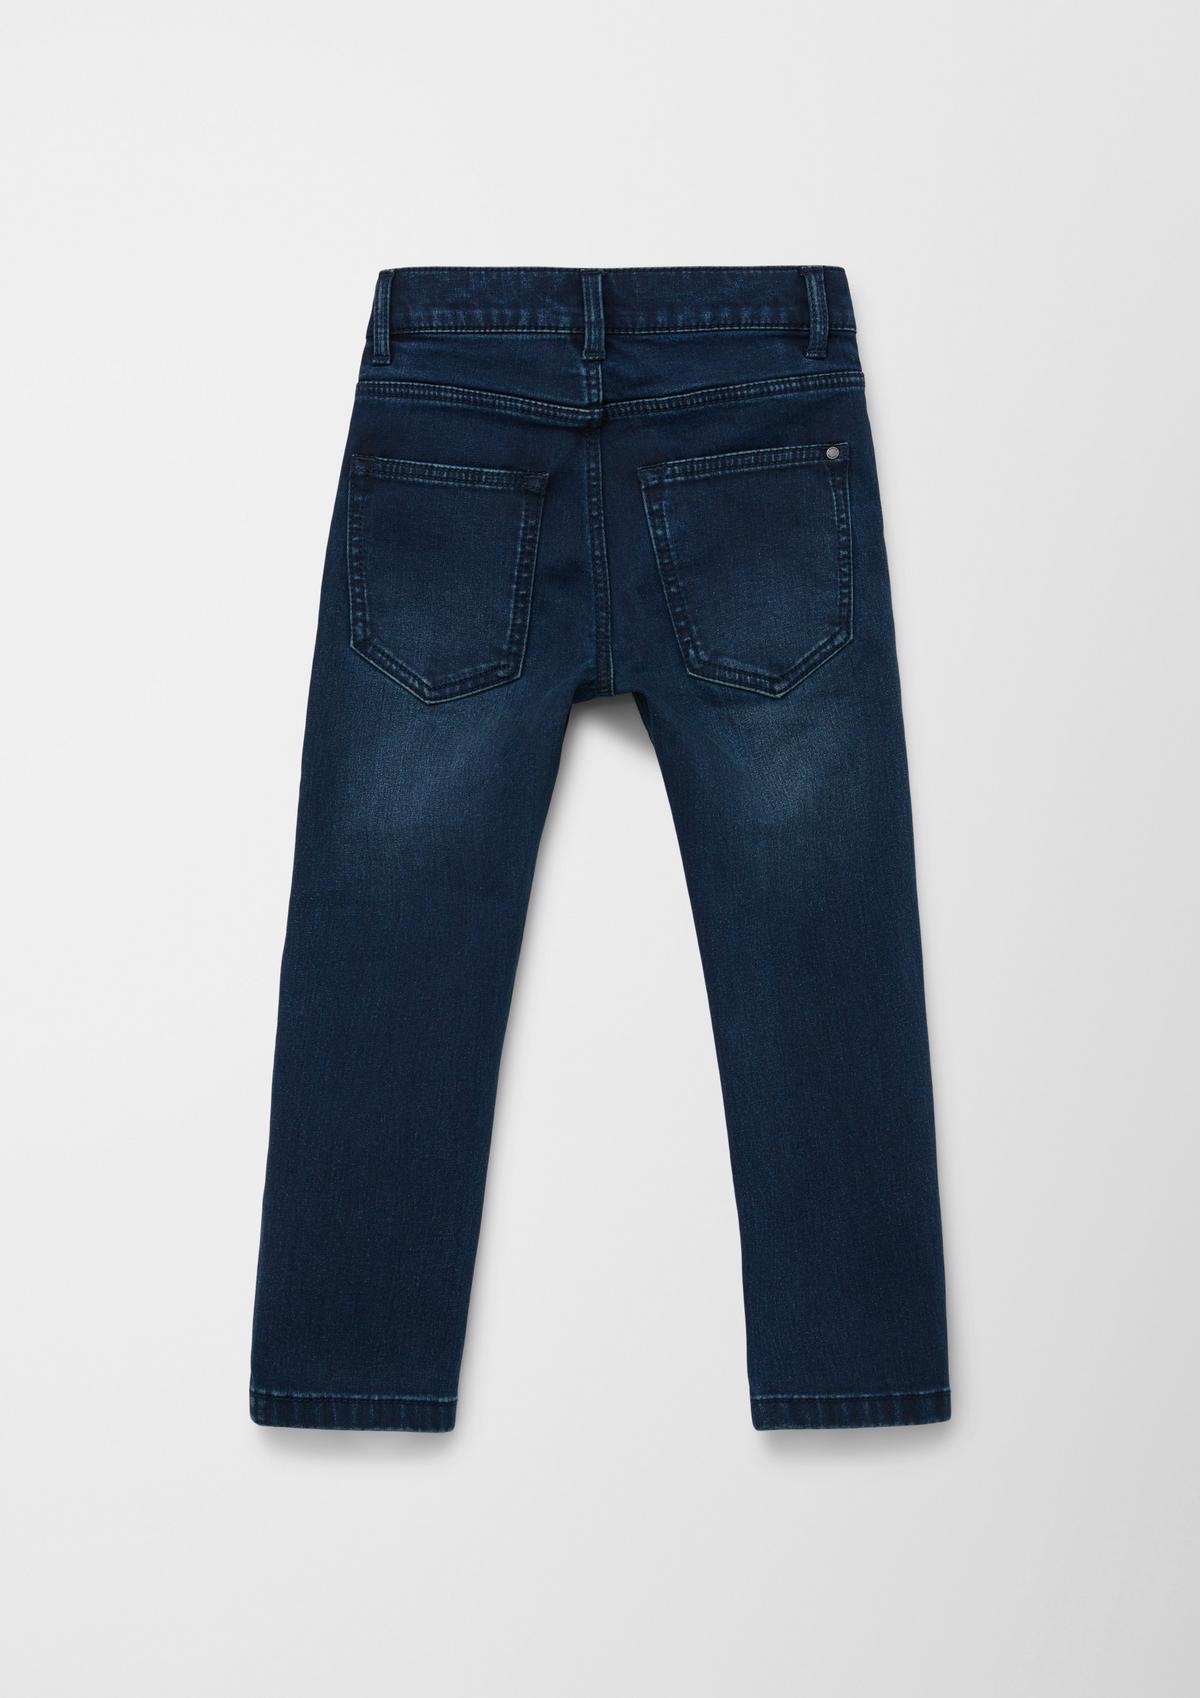 s.Oliver Pelle jeans / regular fit / mid rise / straight leg / vintage look